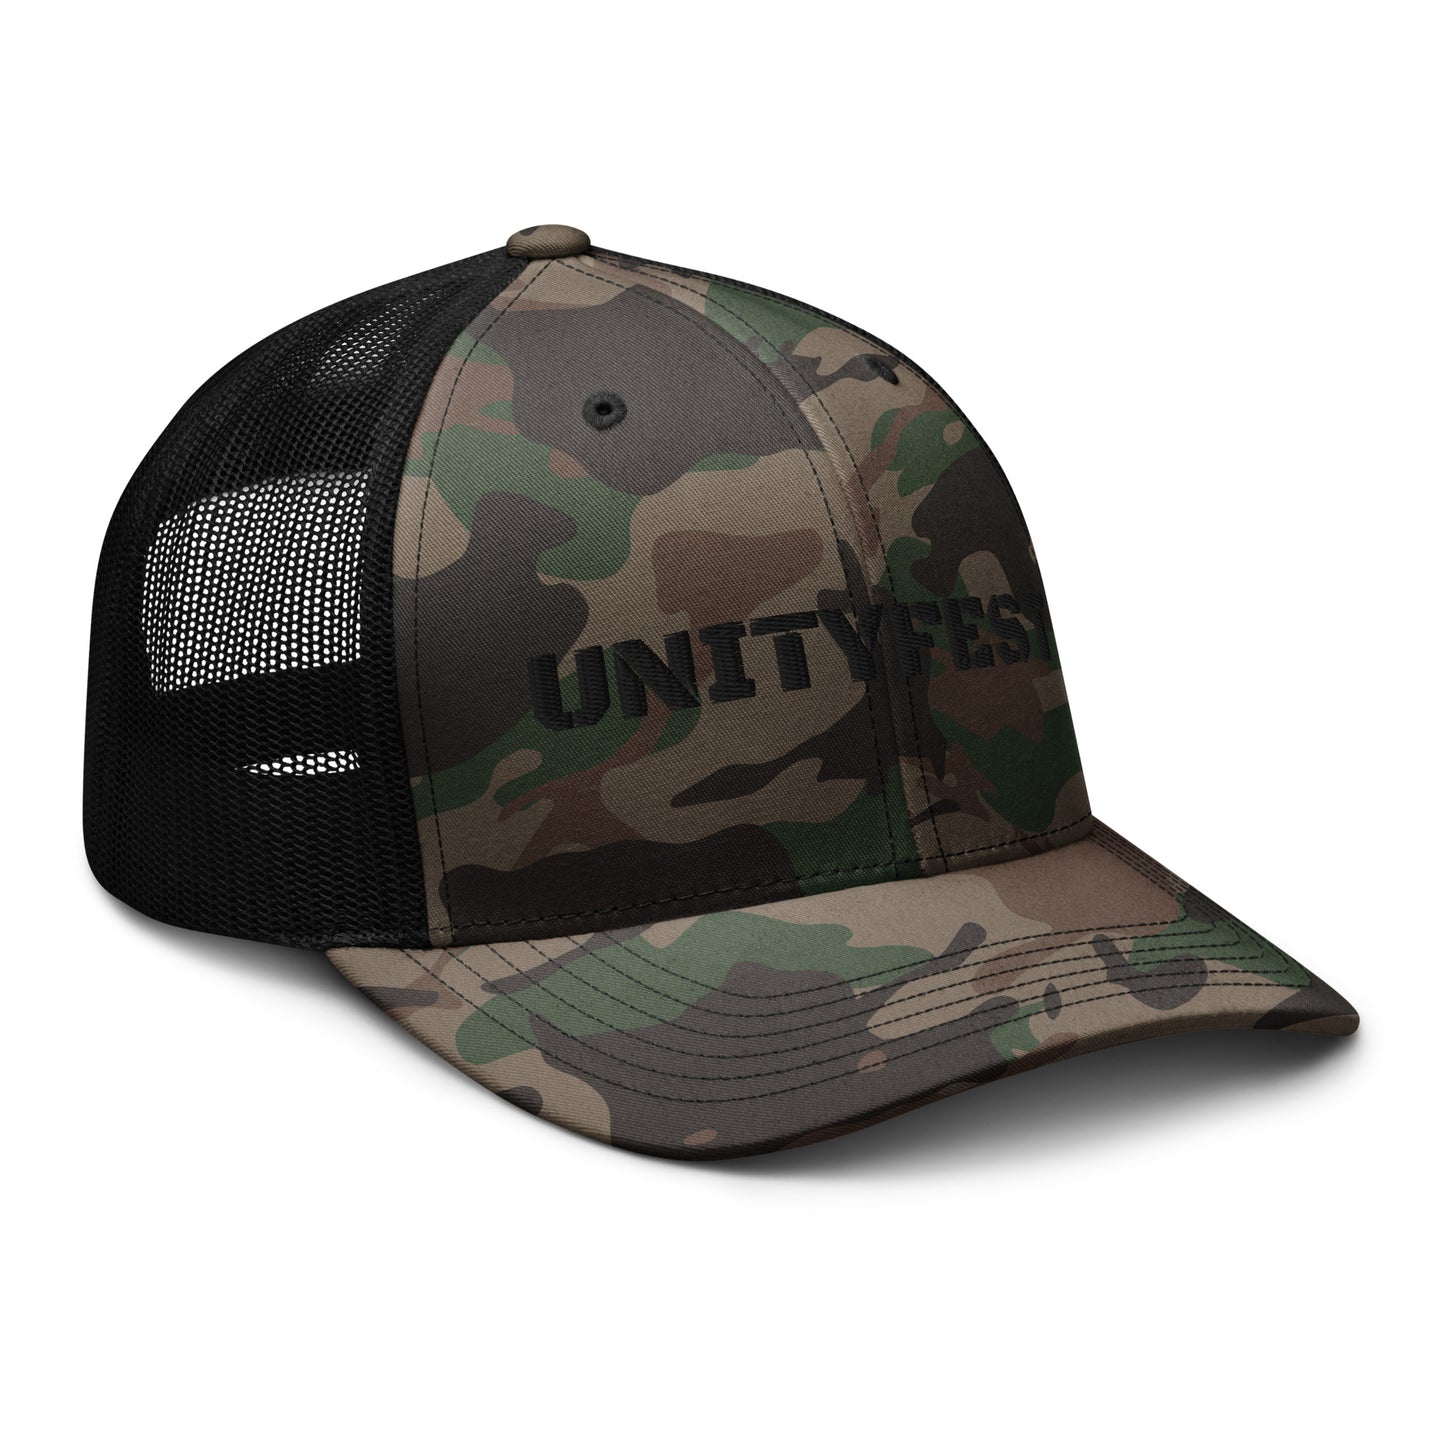 Unityfest Camouflage trucker hat